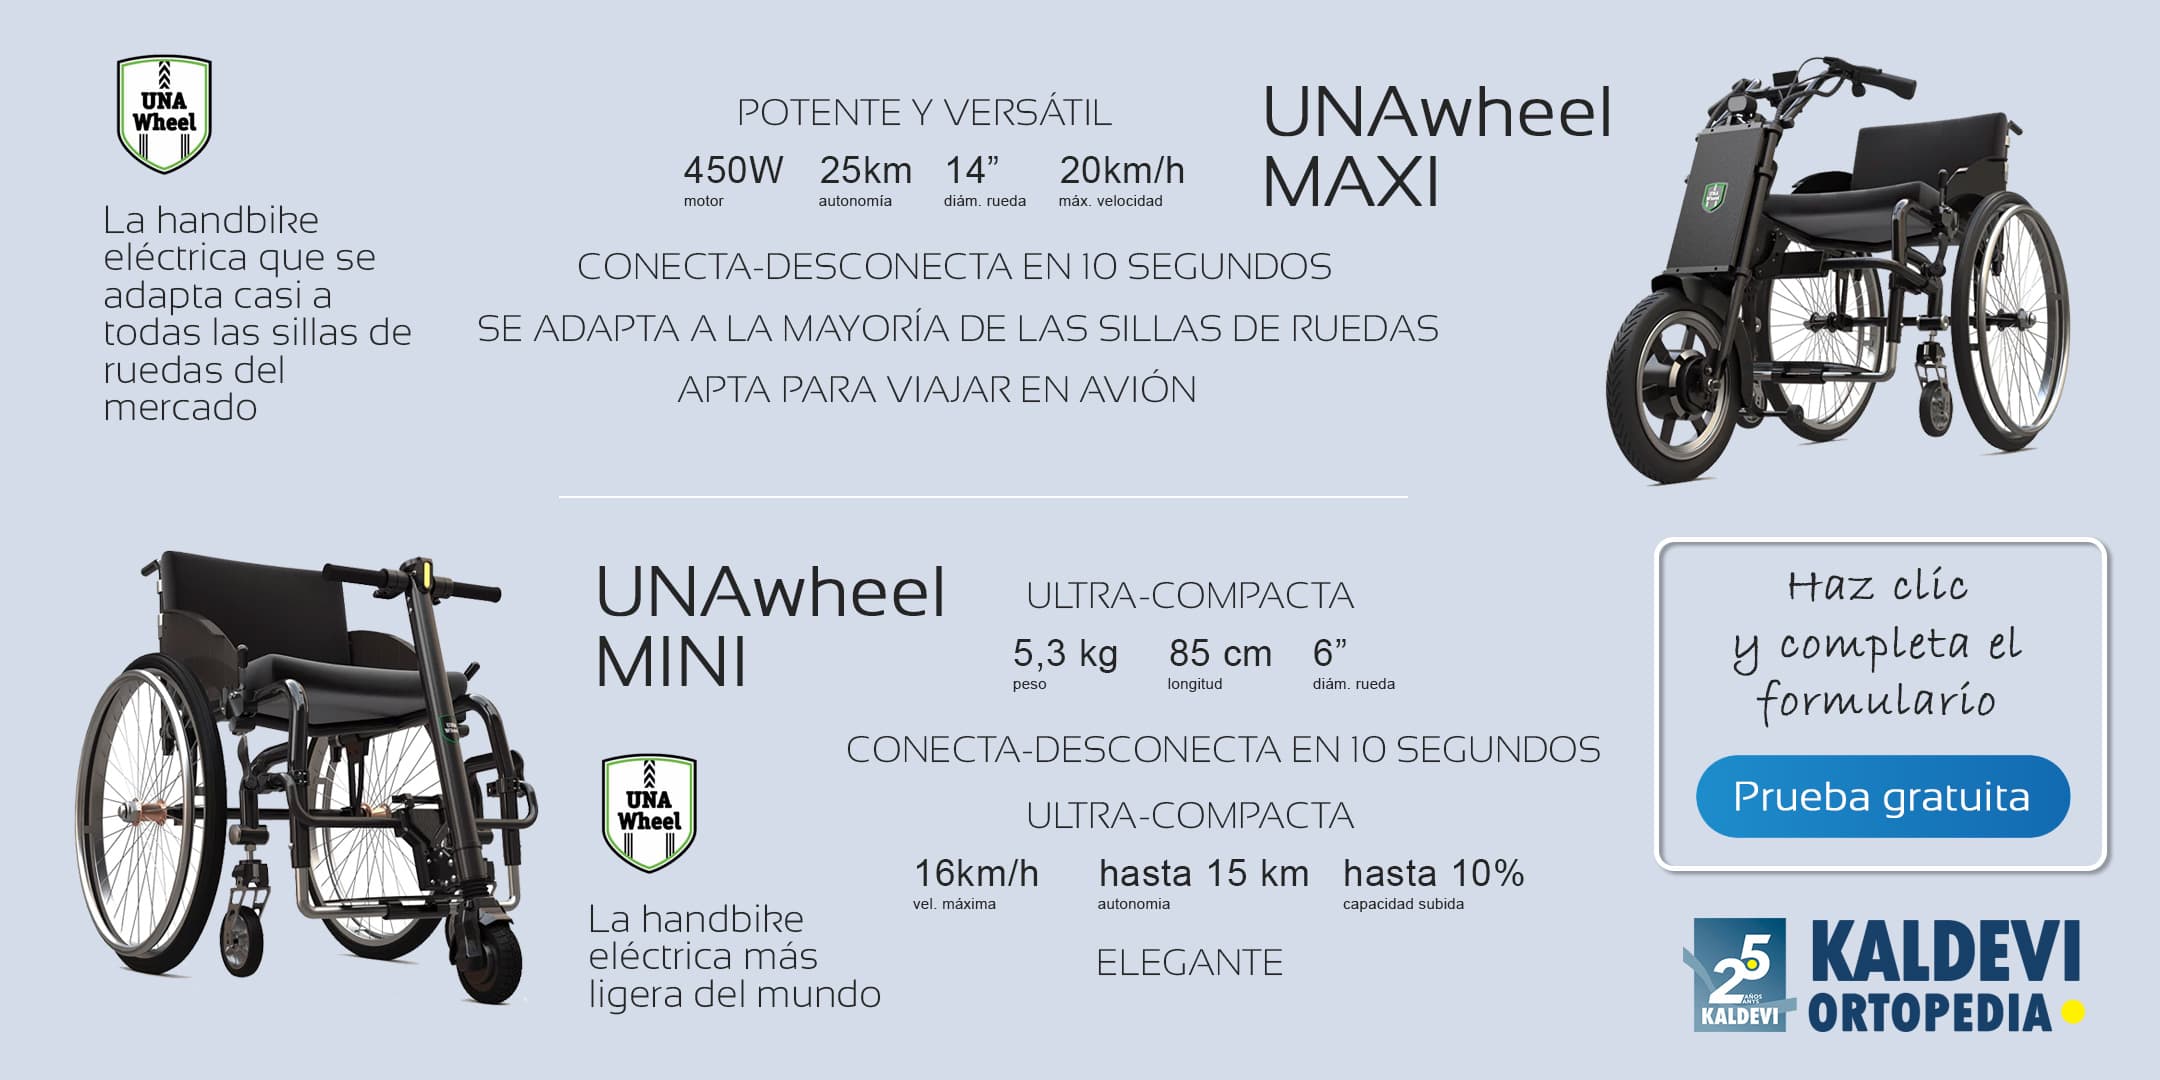 unawheel handbike modelo maxi y mini